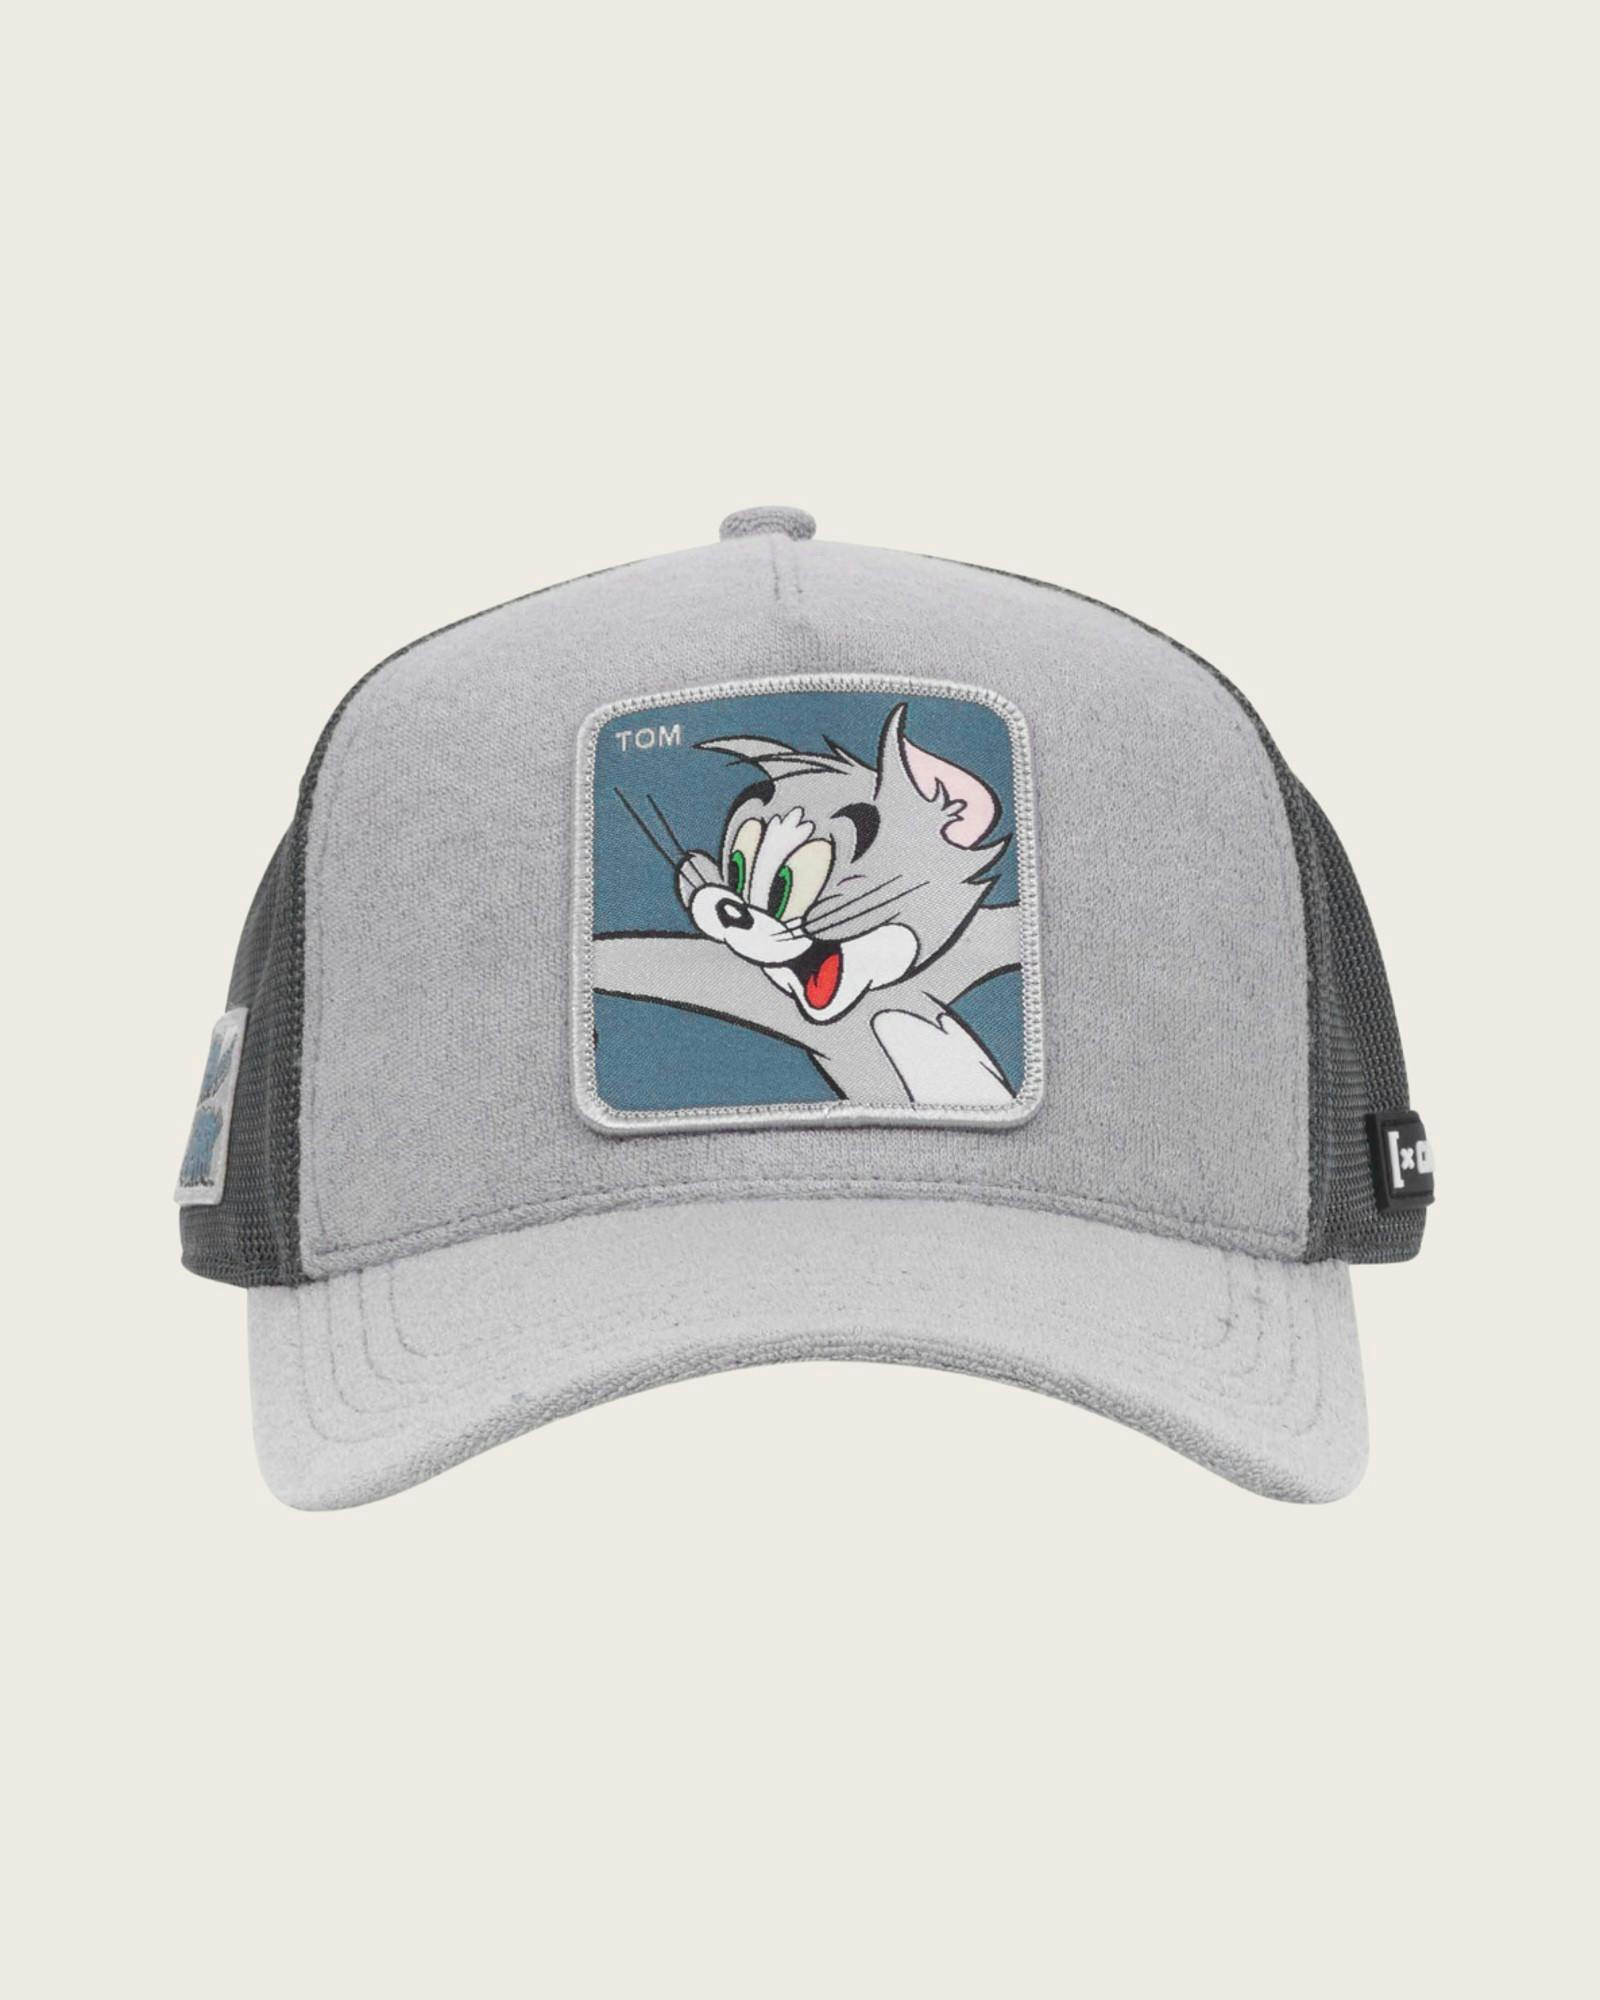 Tom & Jerry Tom Grey Capslab